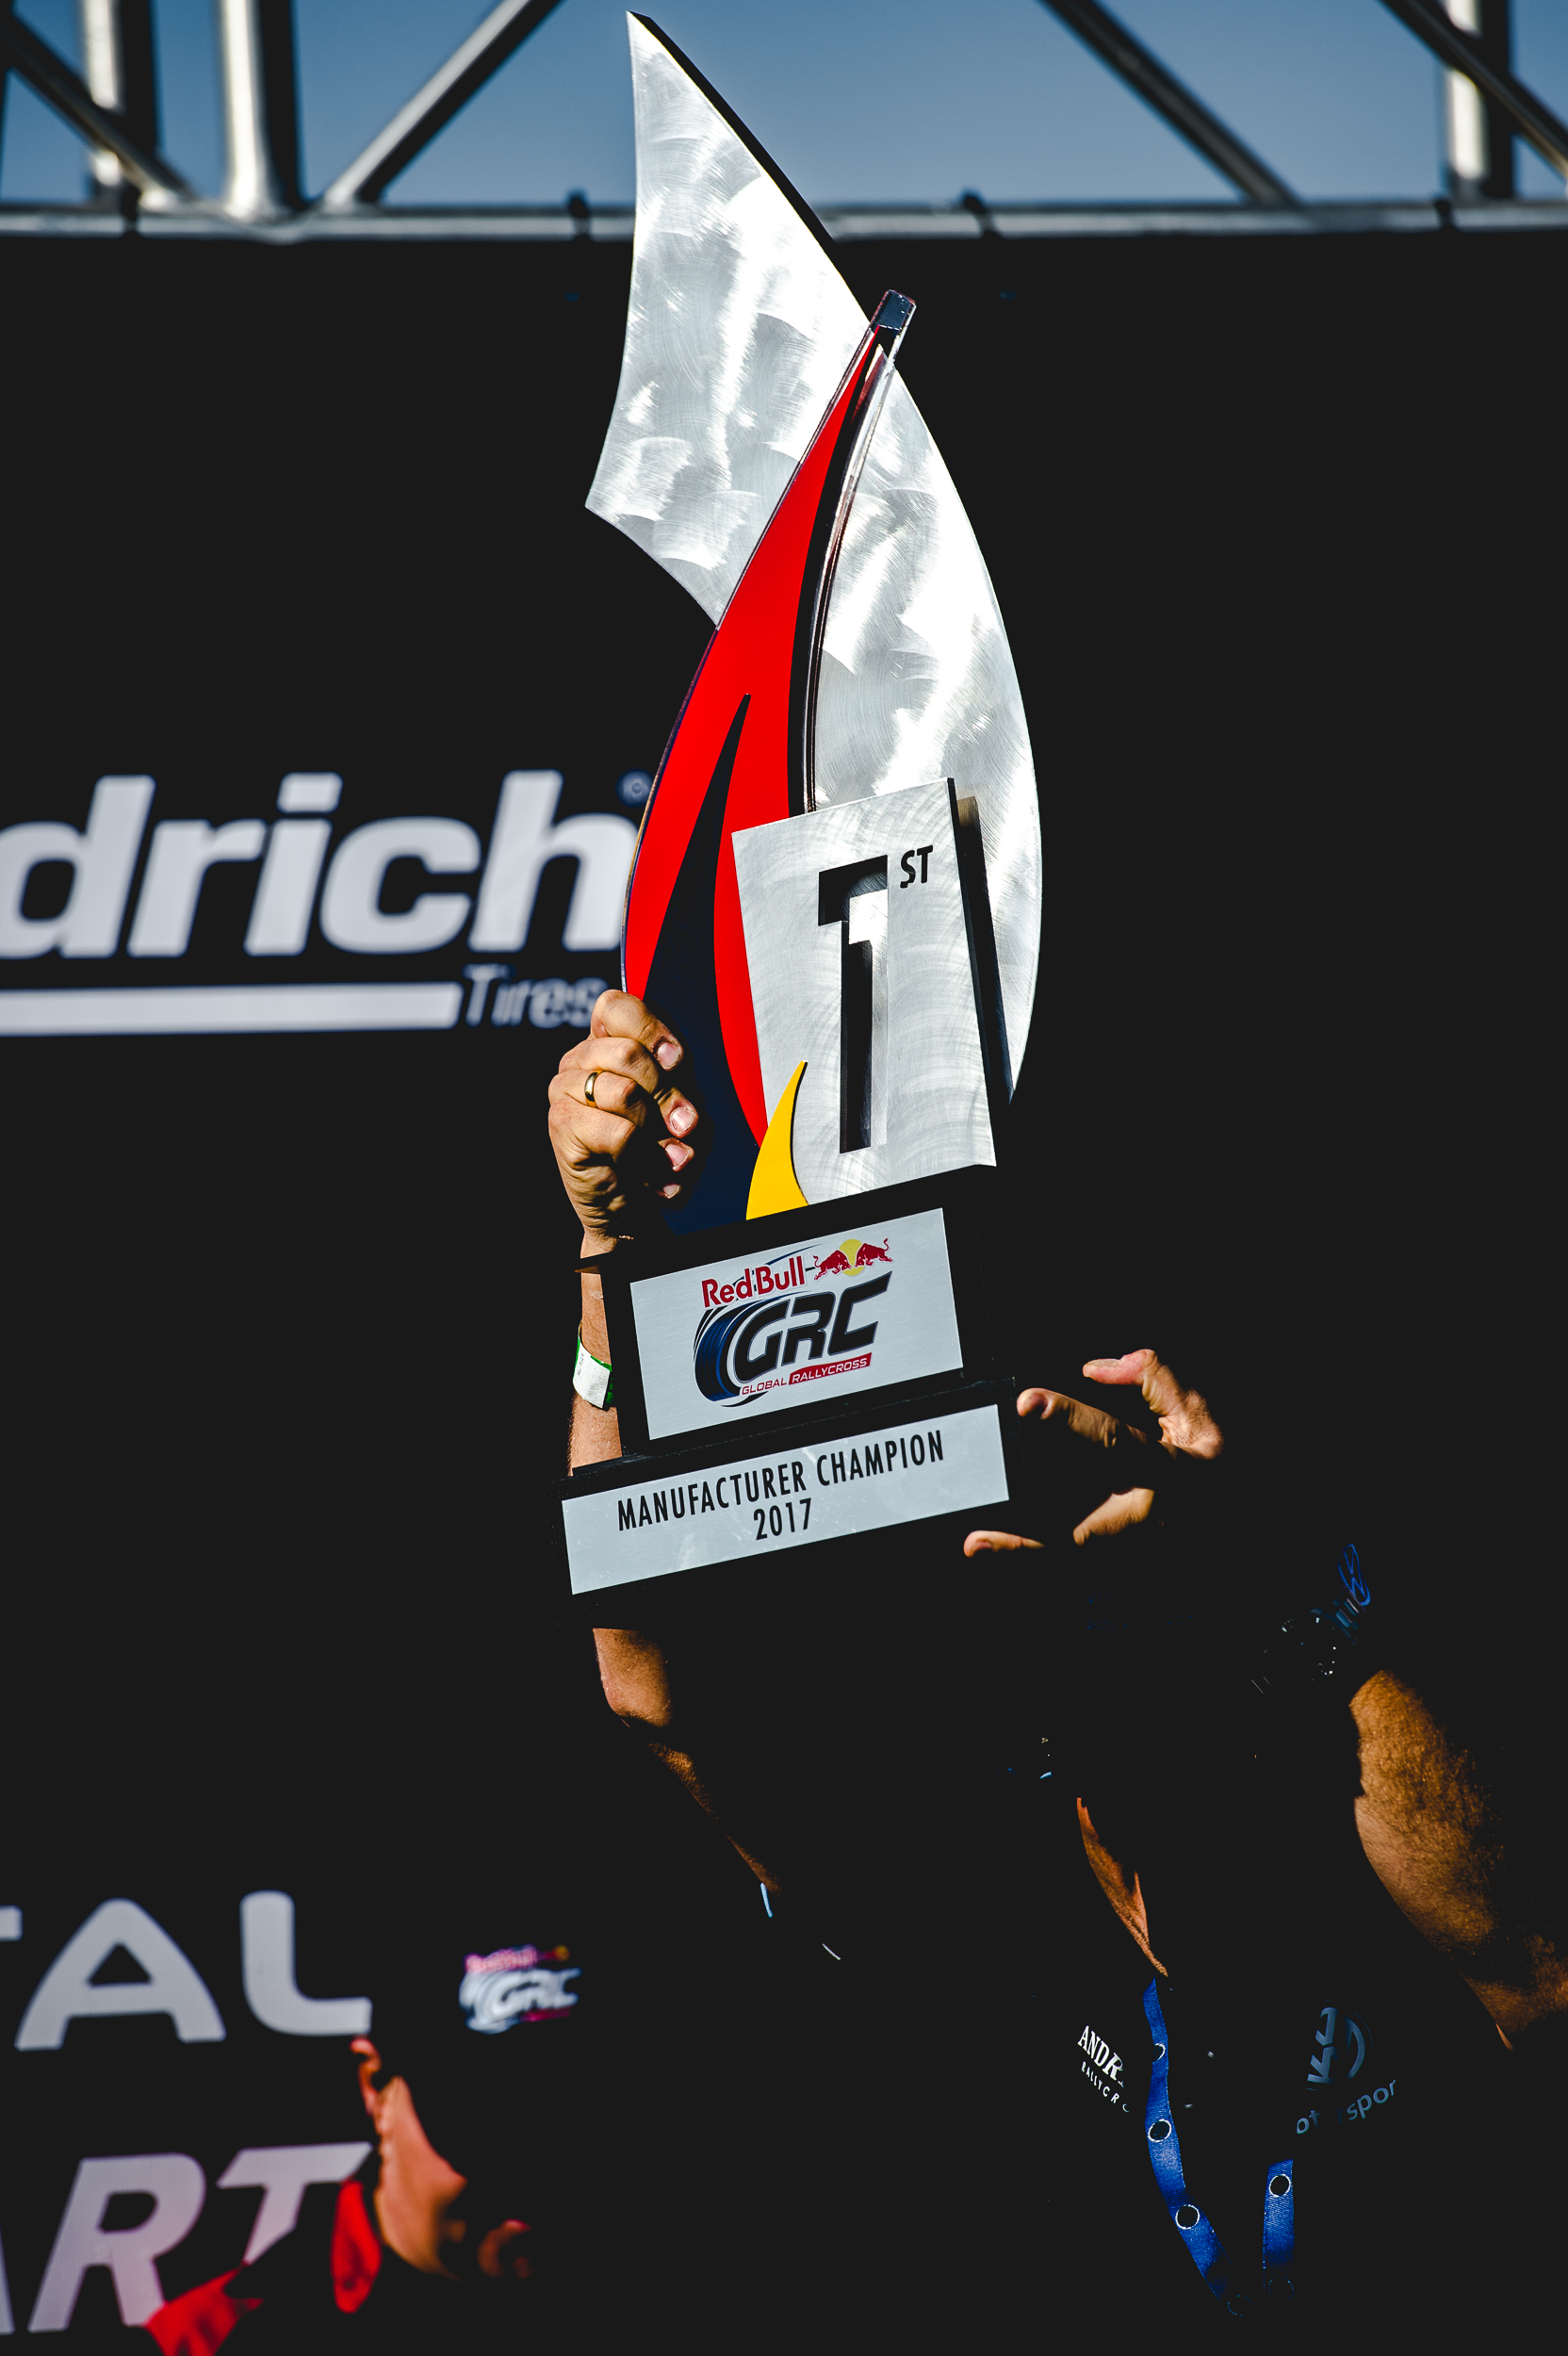  2017 Red Bull GRC Supercar Division Manufacturer Champion:&nbsp;  Volkswagen Andretti Rallycross   